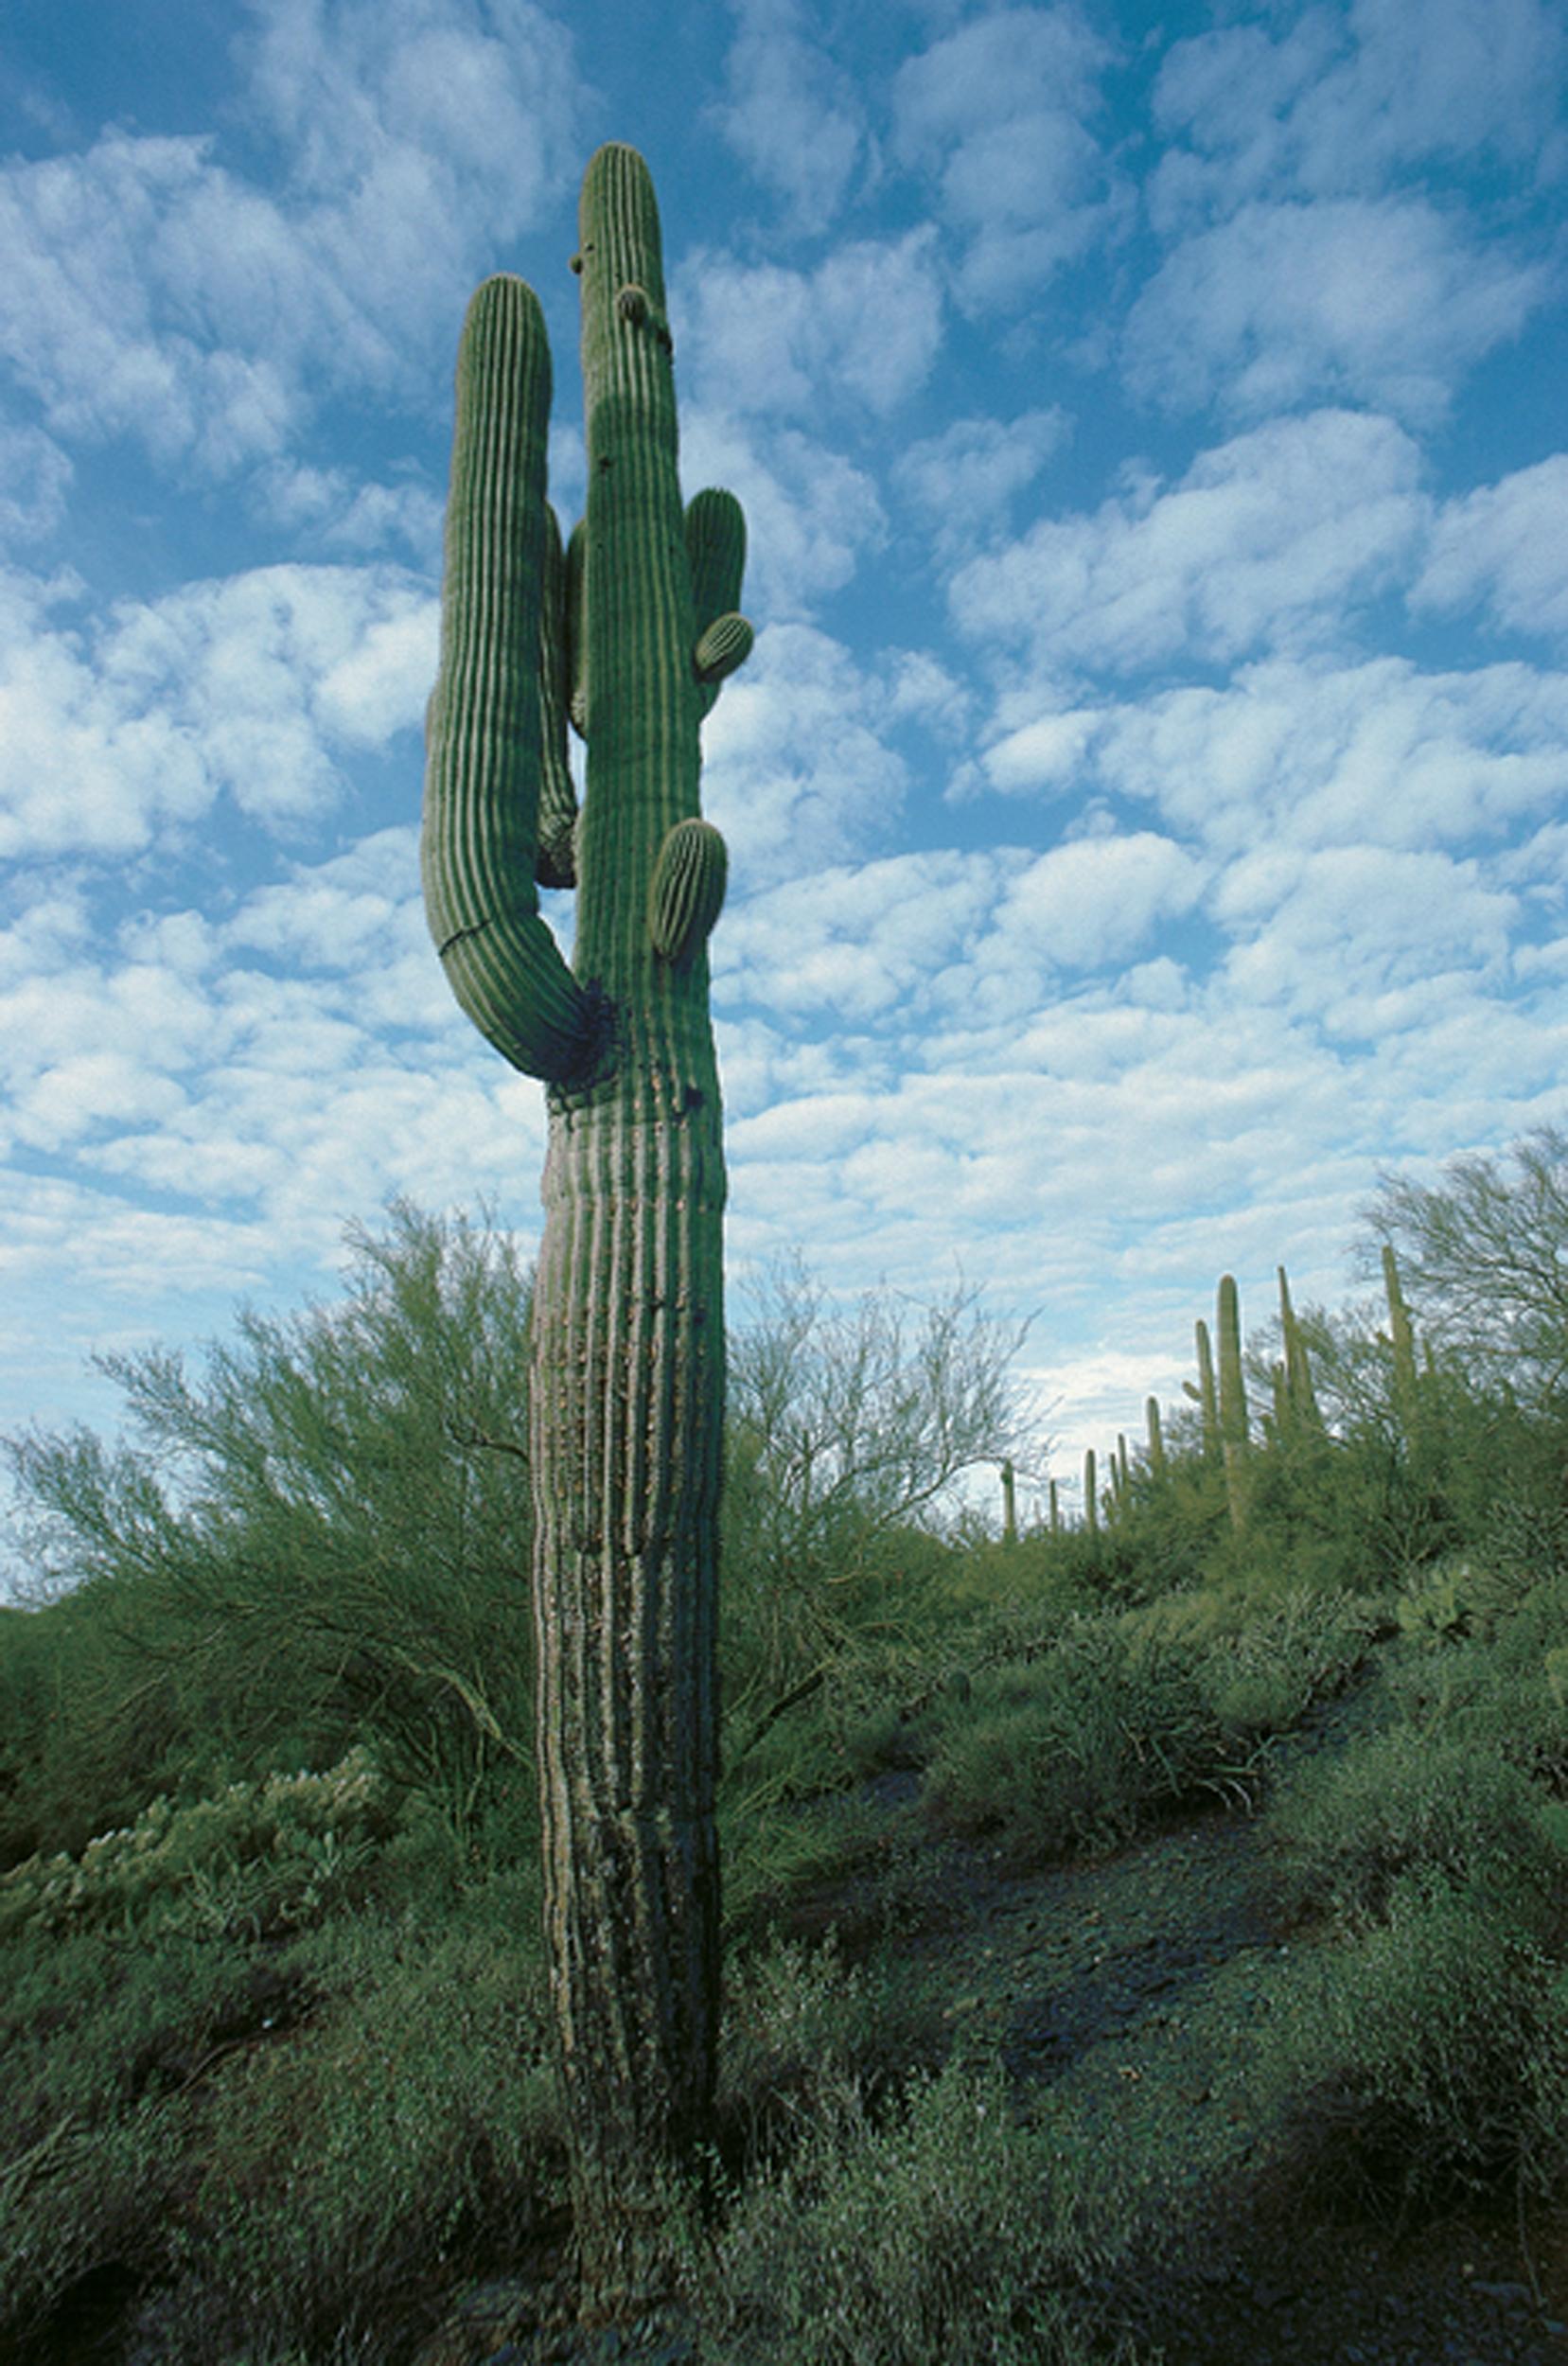 American Contemporary Photo by M. K. Yamaoka - Giant Saguaro Cactus, Arizona